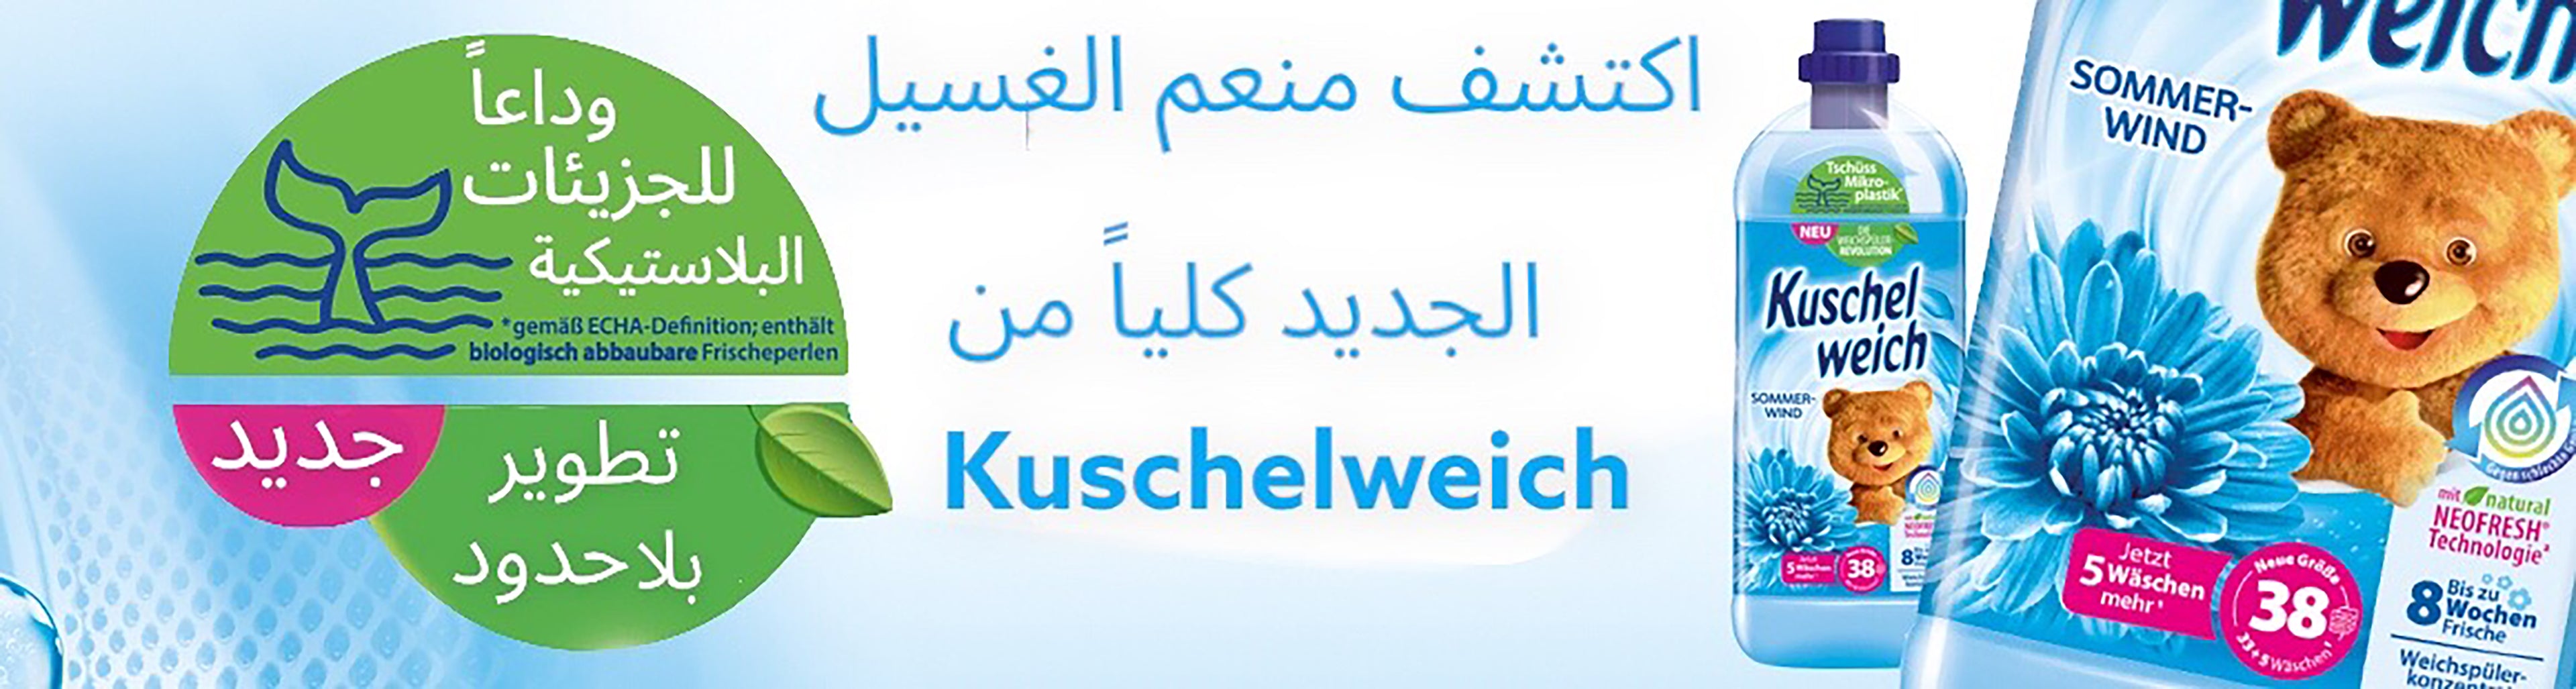 Kuschelweich Luxury Moments